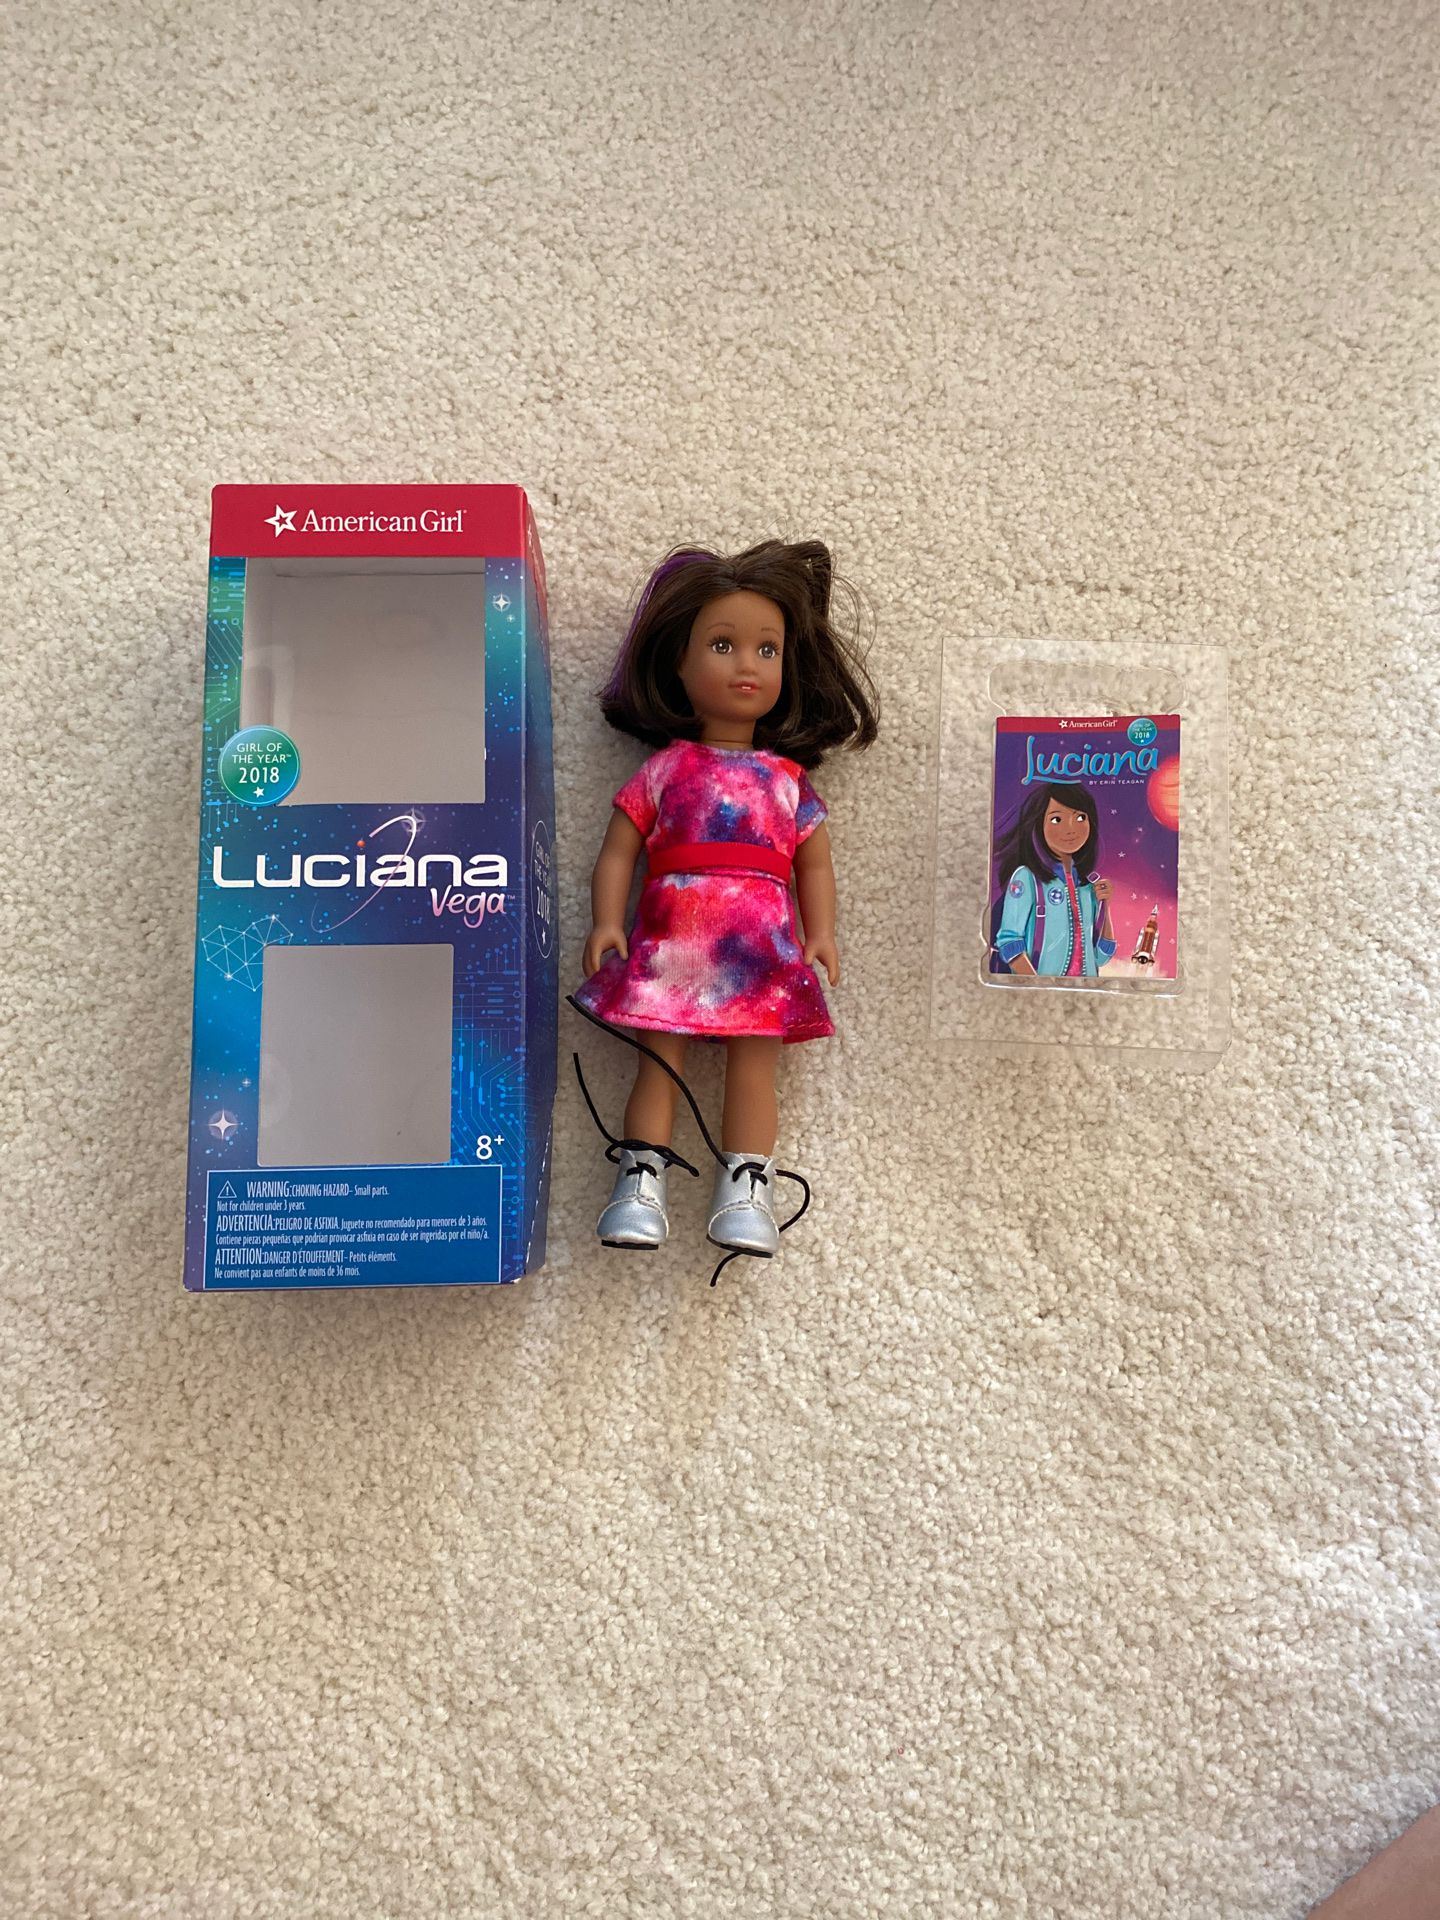 American girl doll Luciana Vega’s mini doll